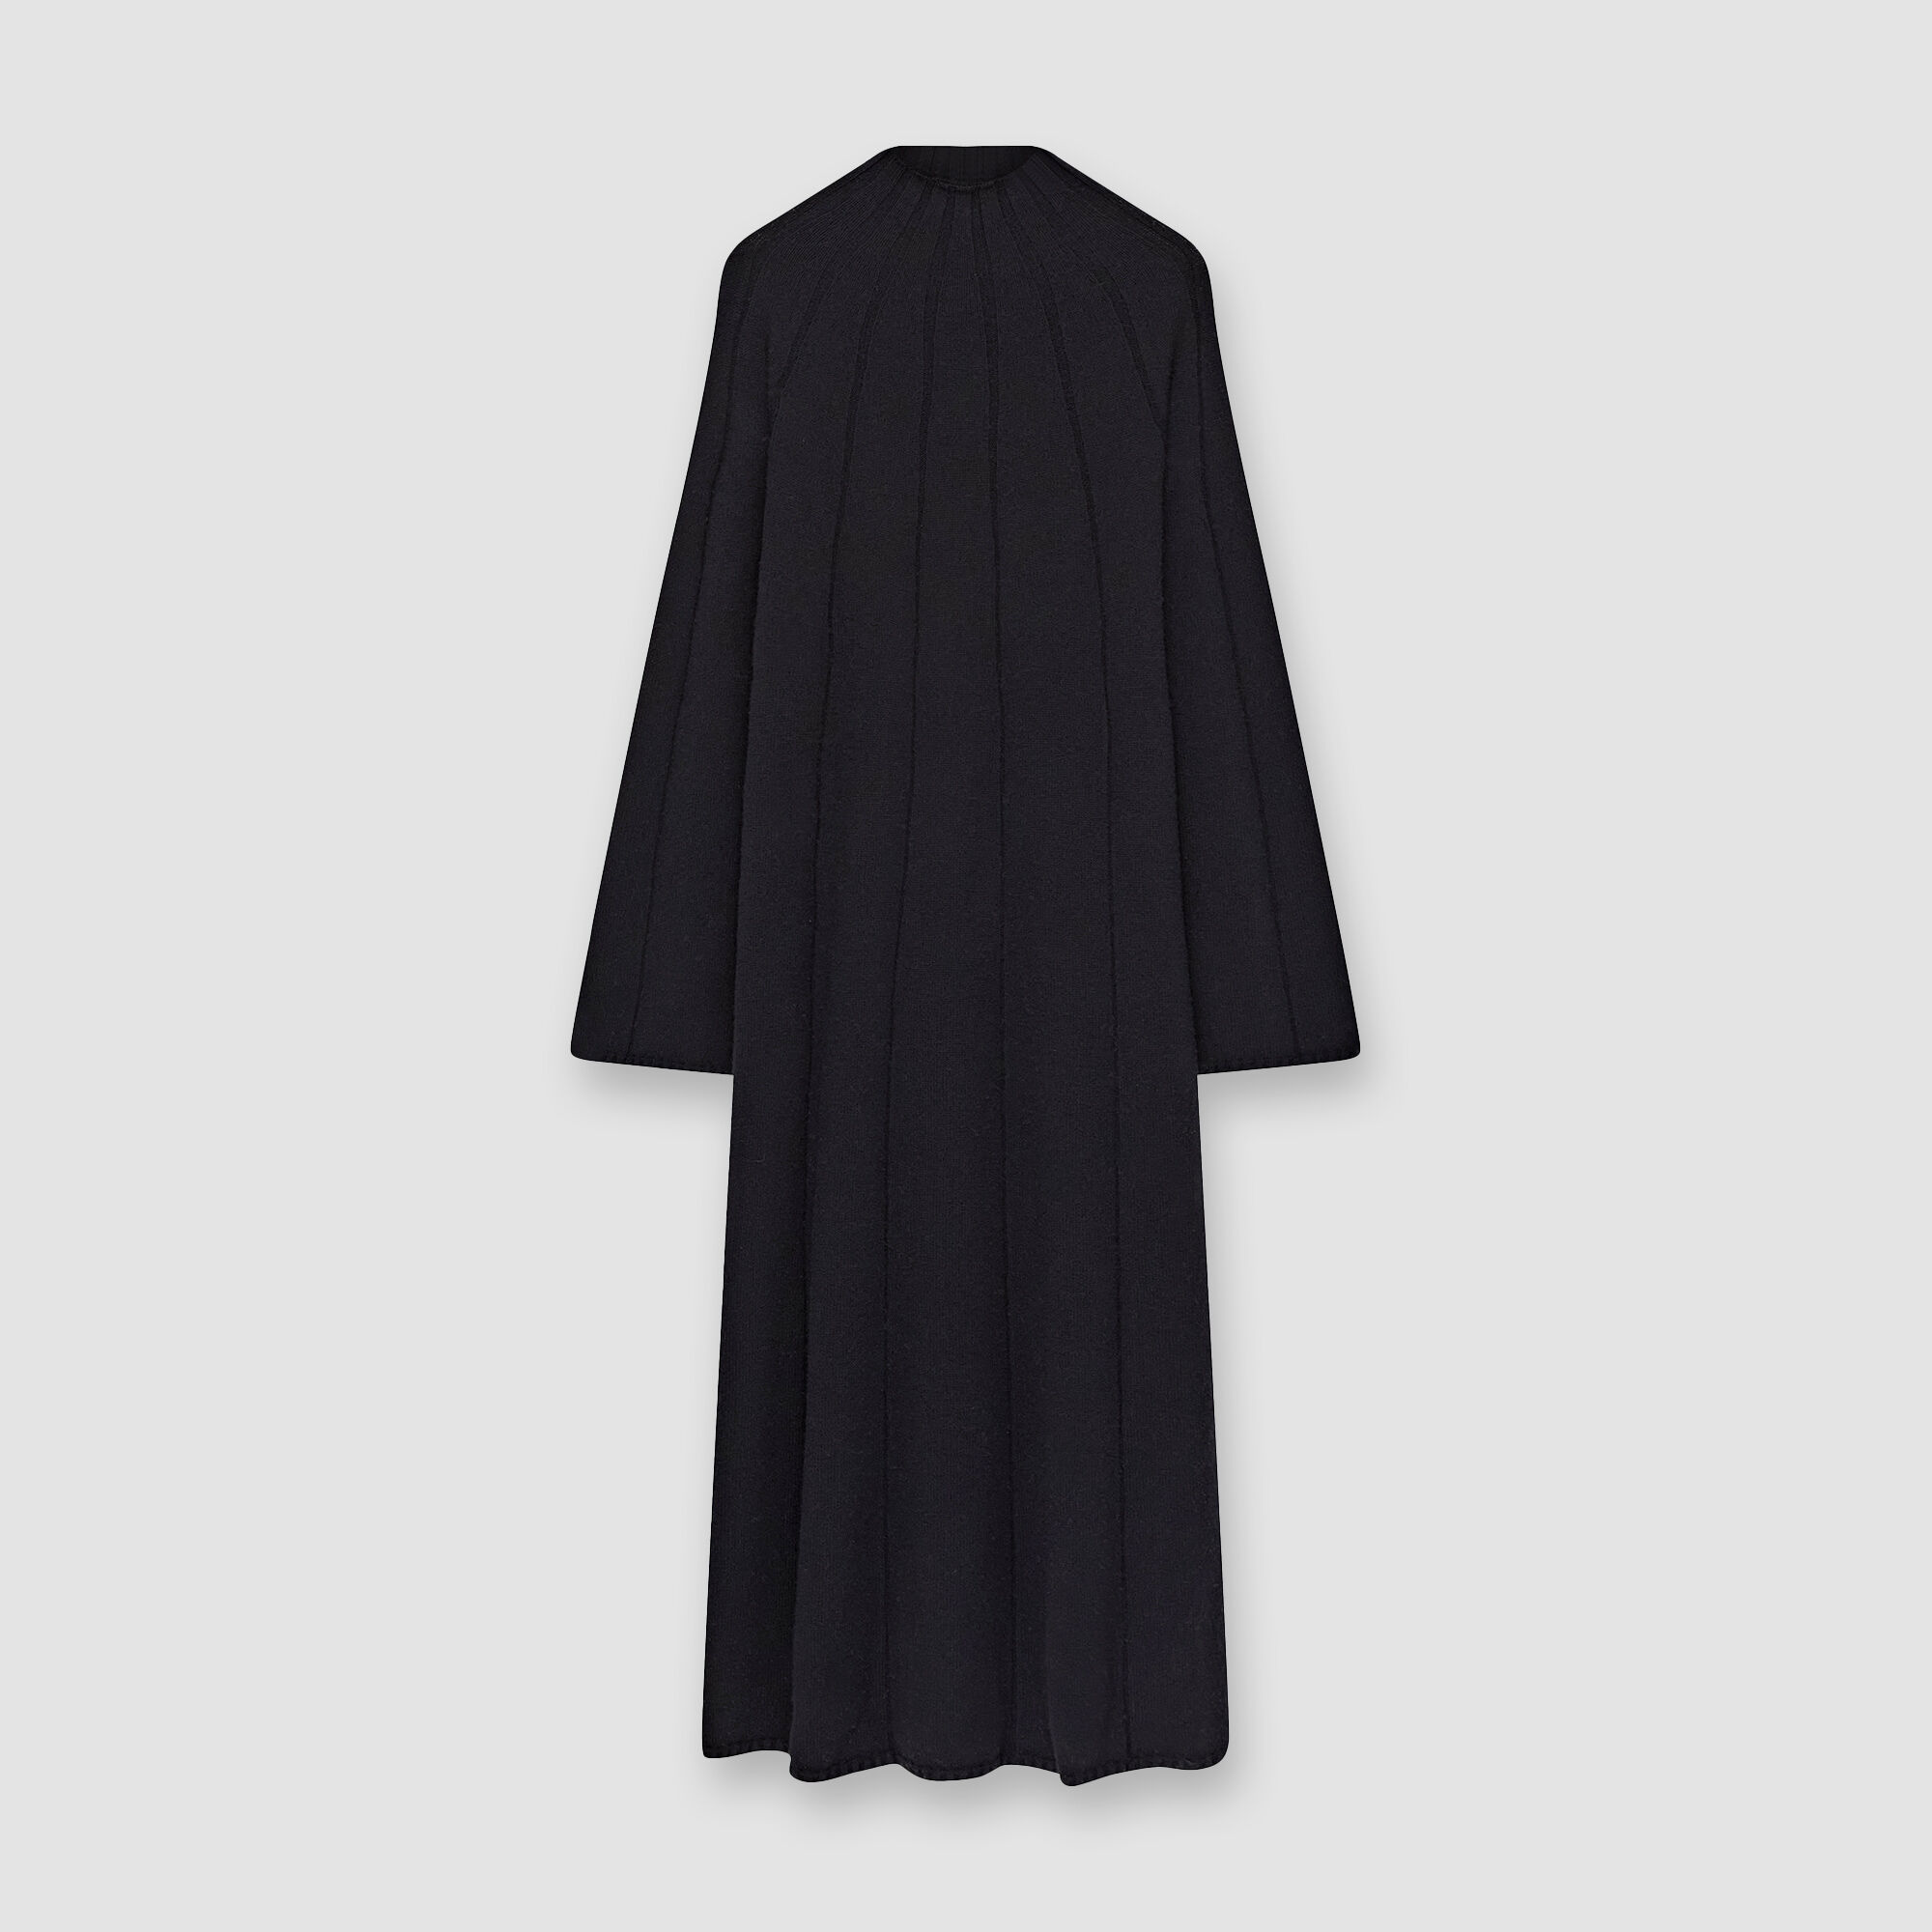 SAINT LAURENT Wool mini dress | NET-A-PORTER